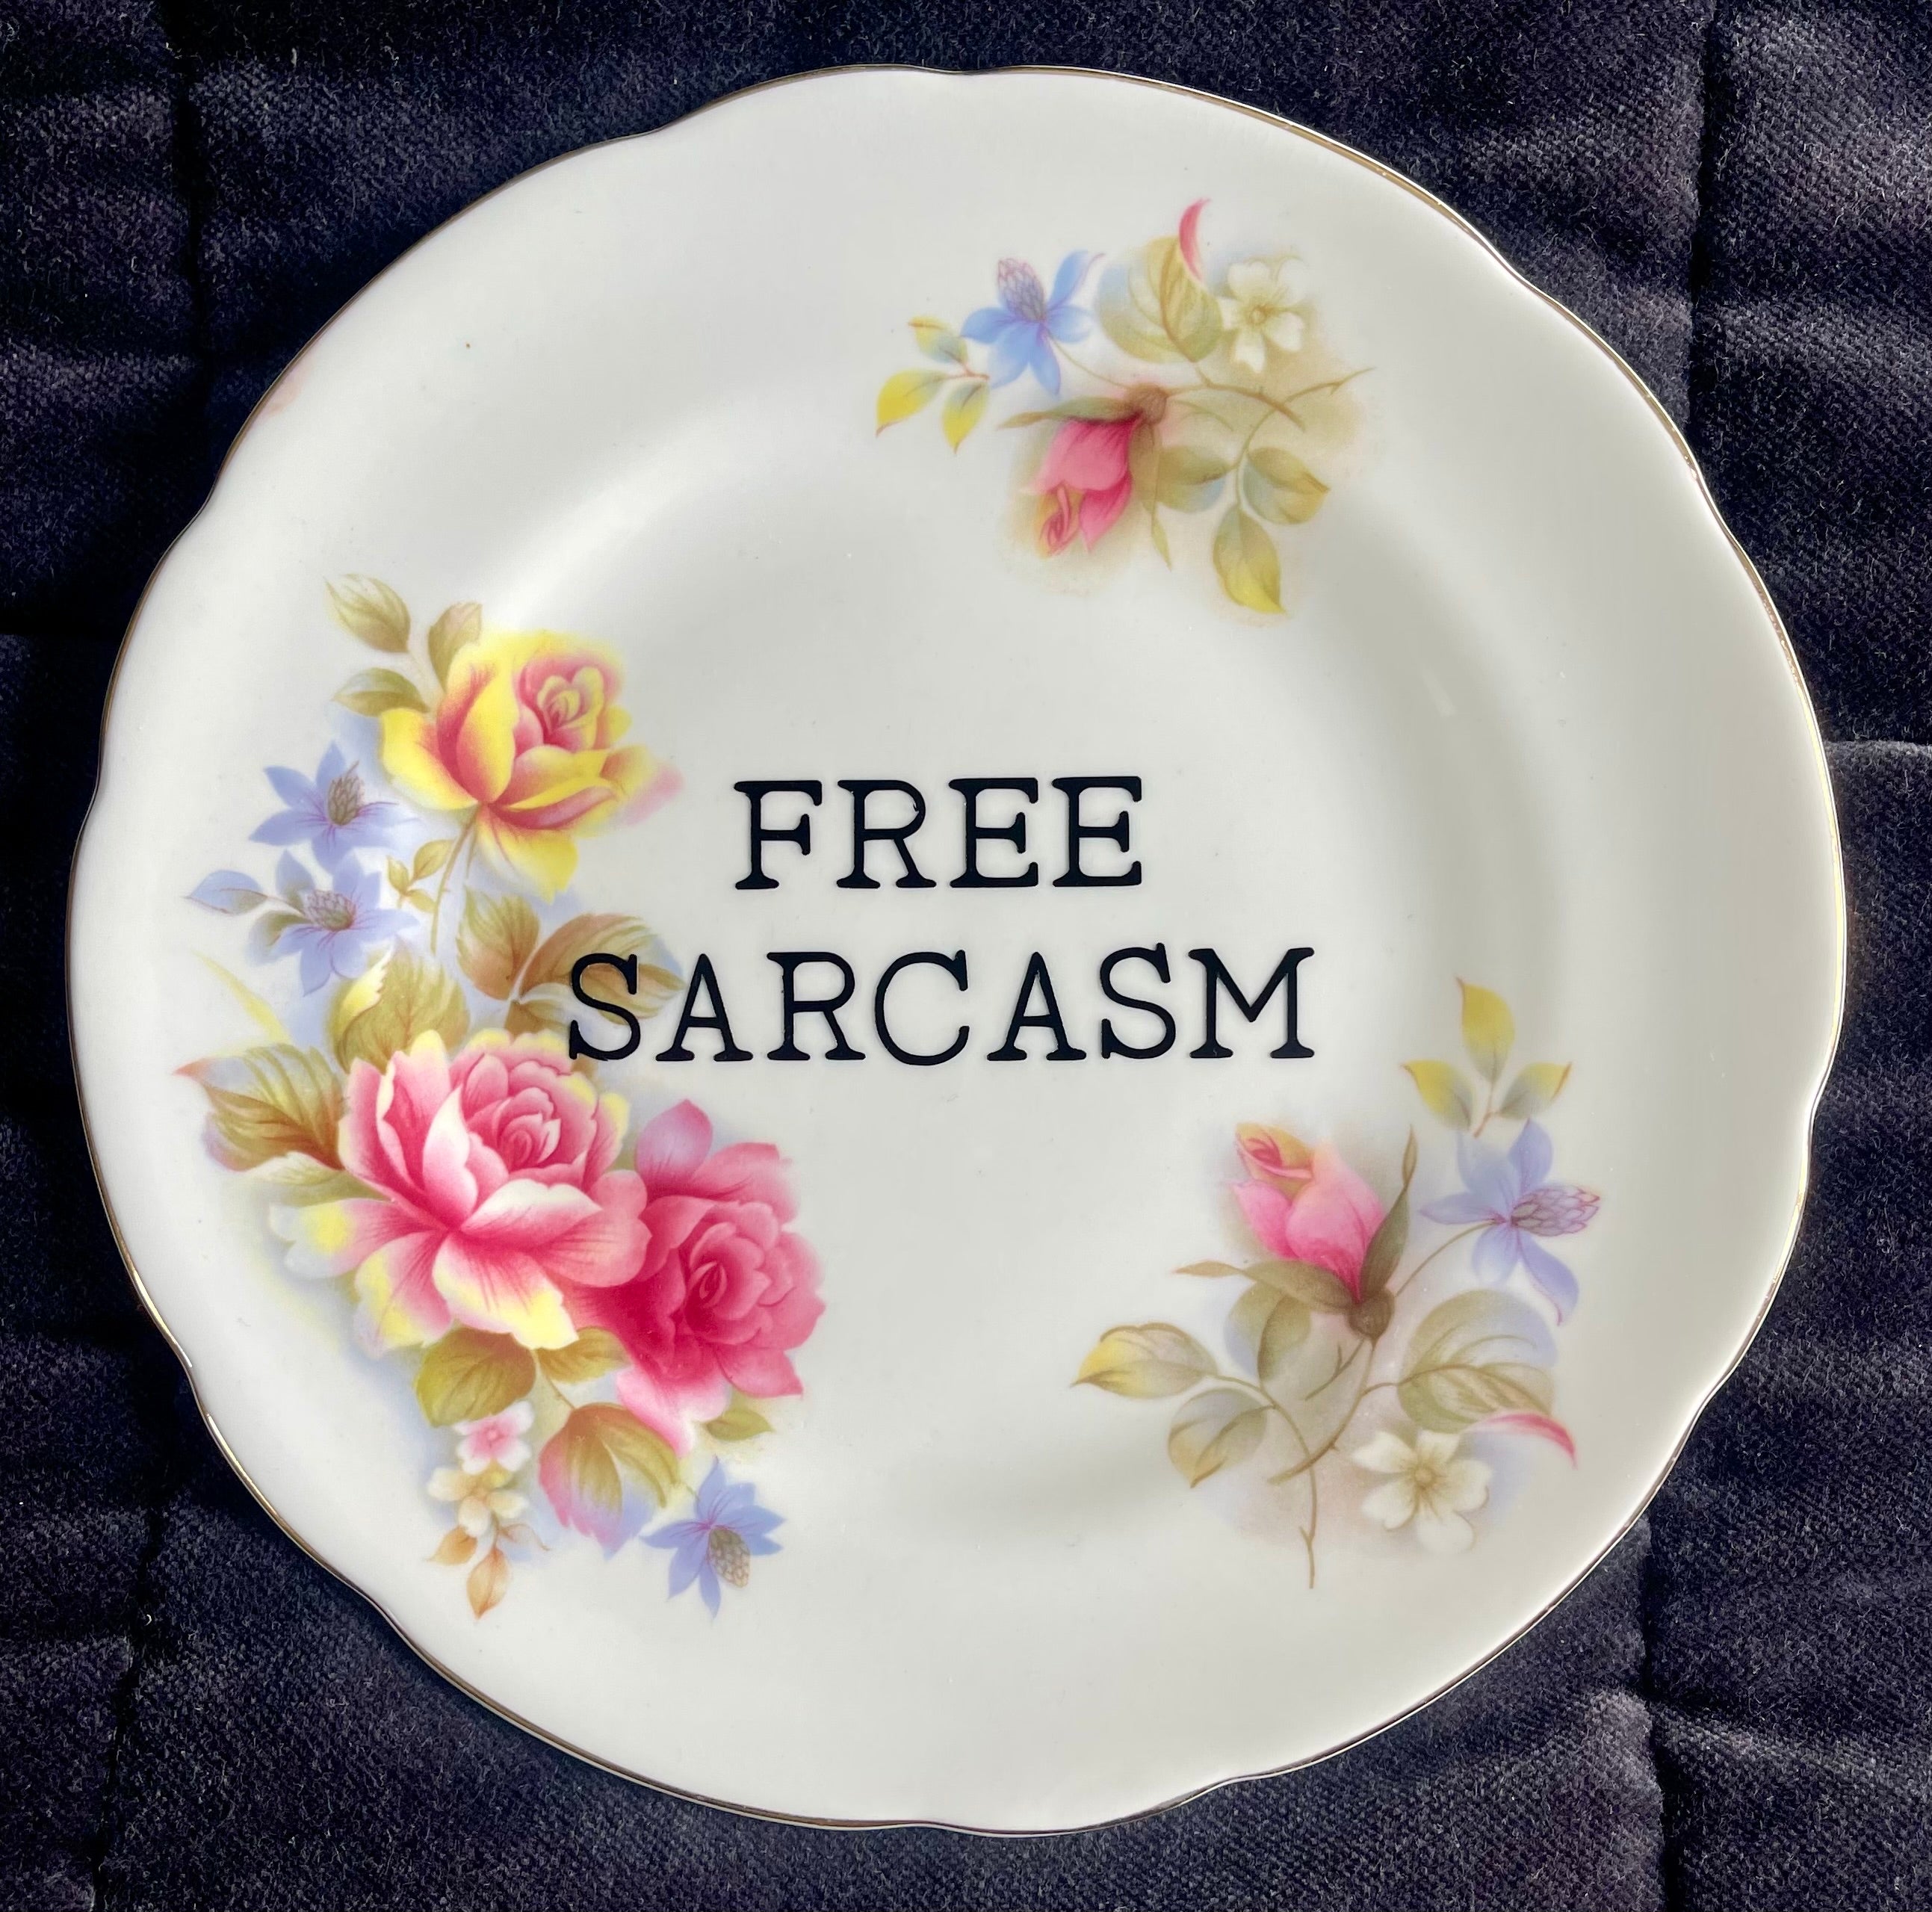 Sweary Plate - Free Sarcasm